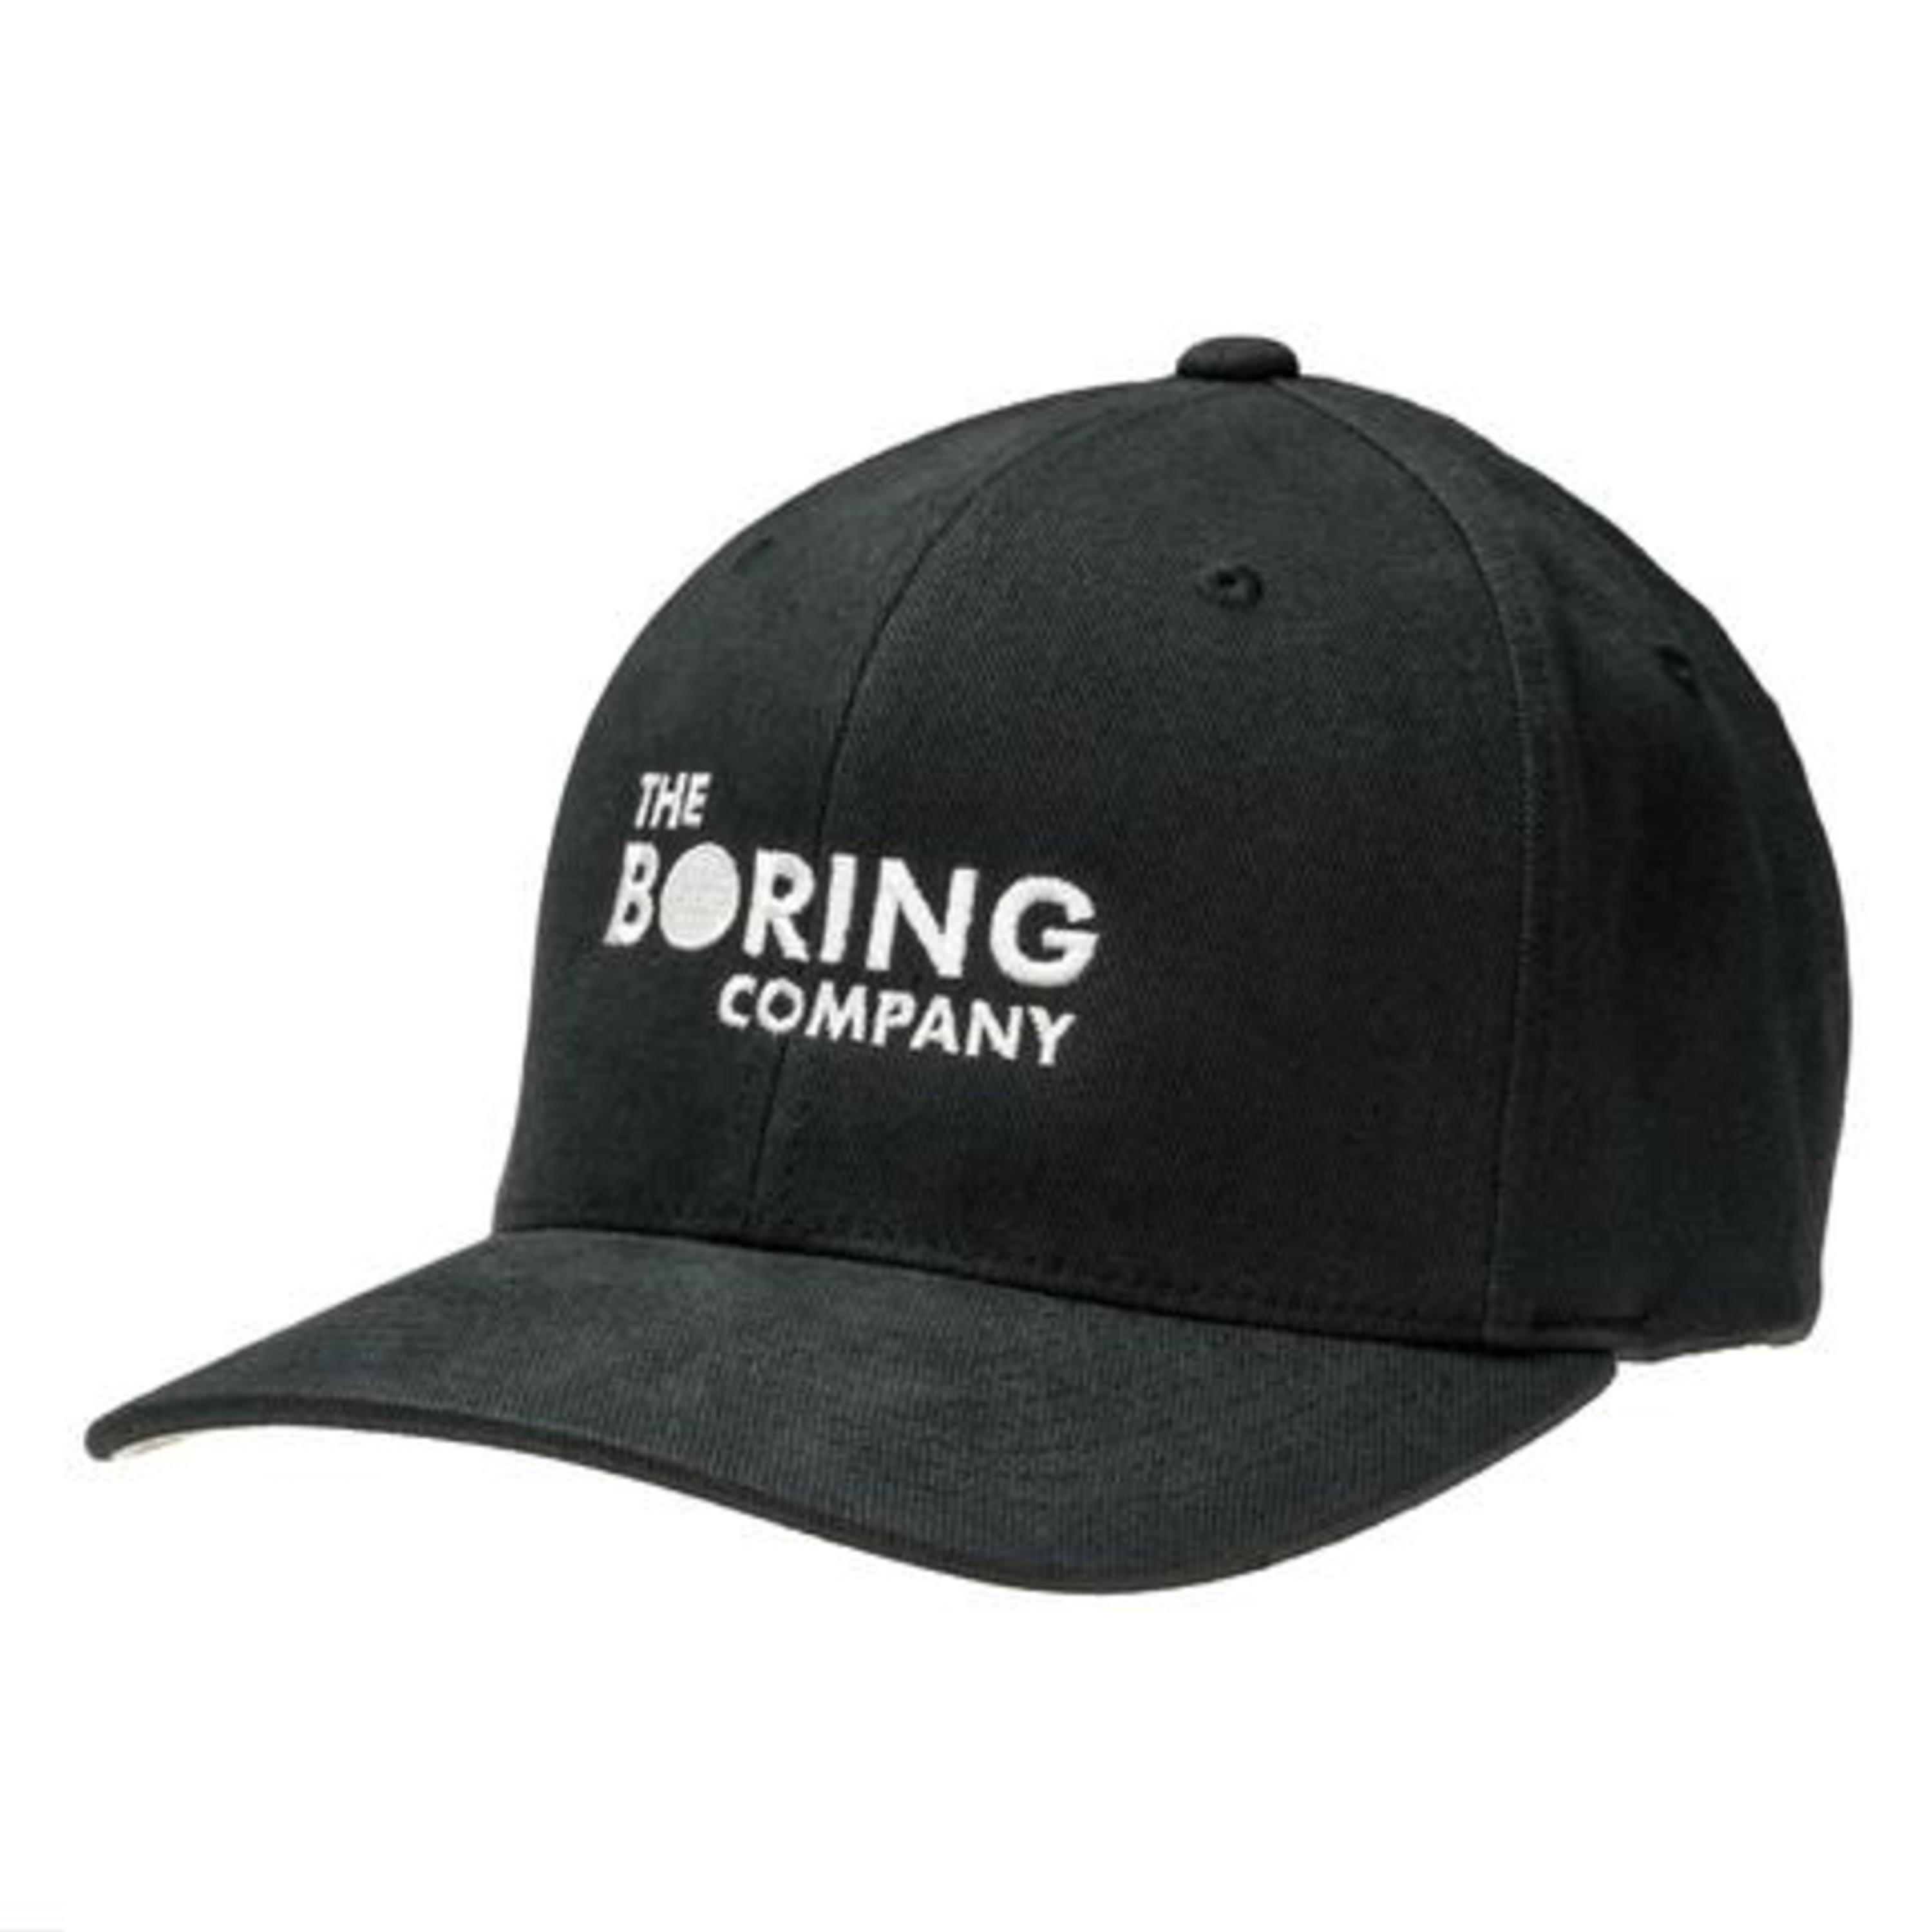 Boring Hats